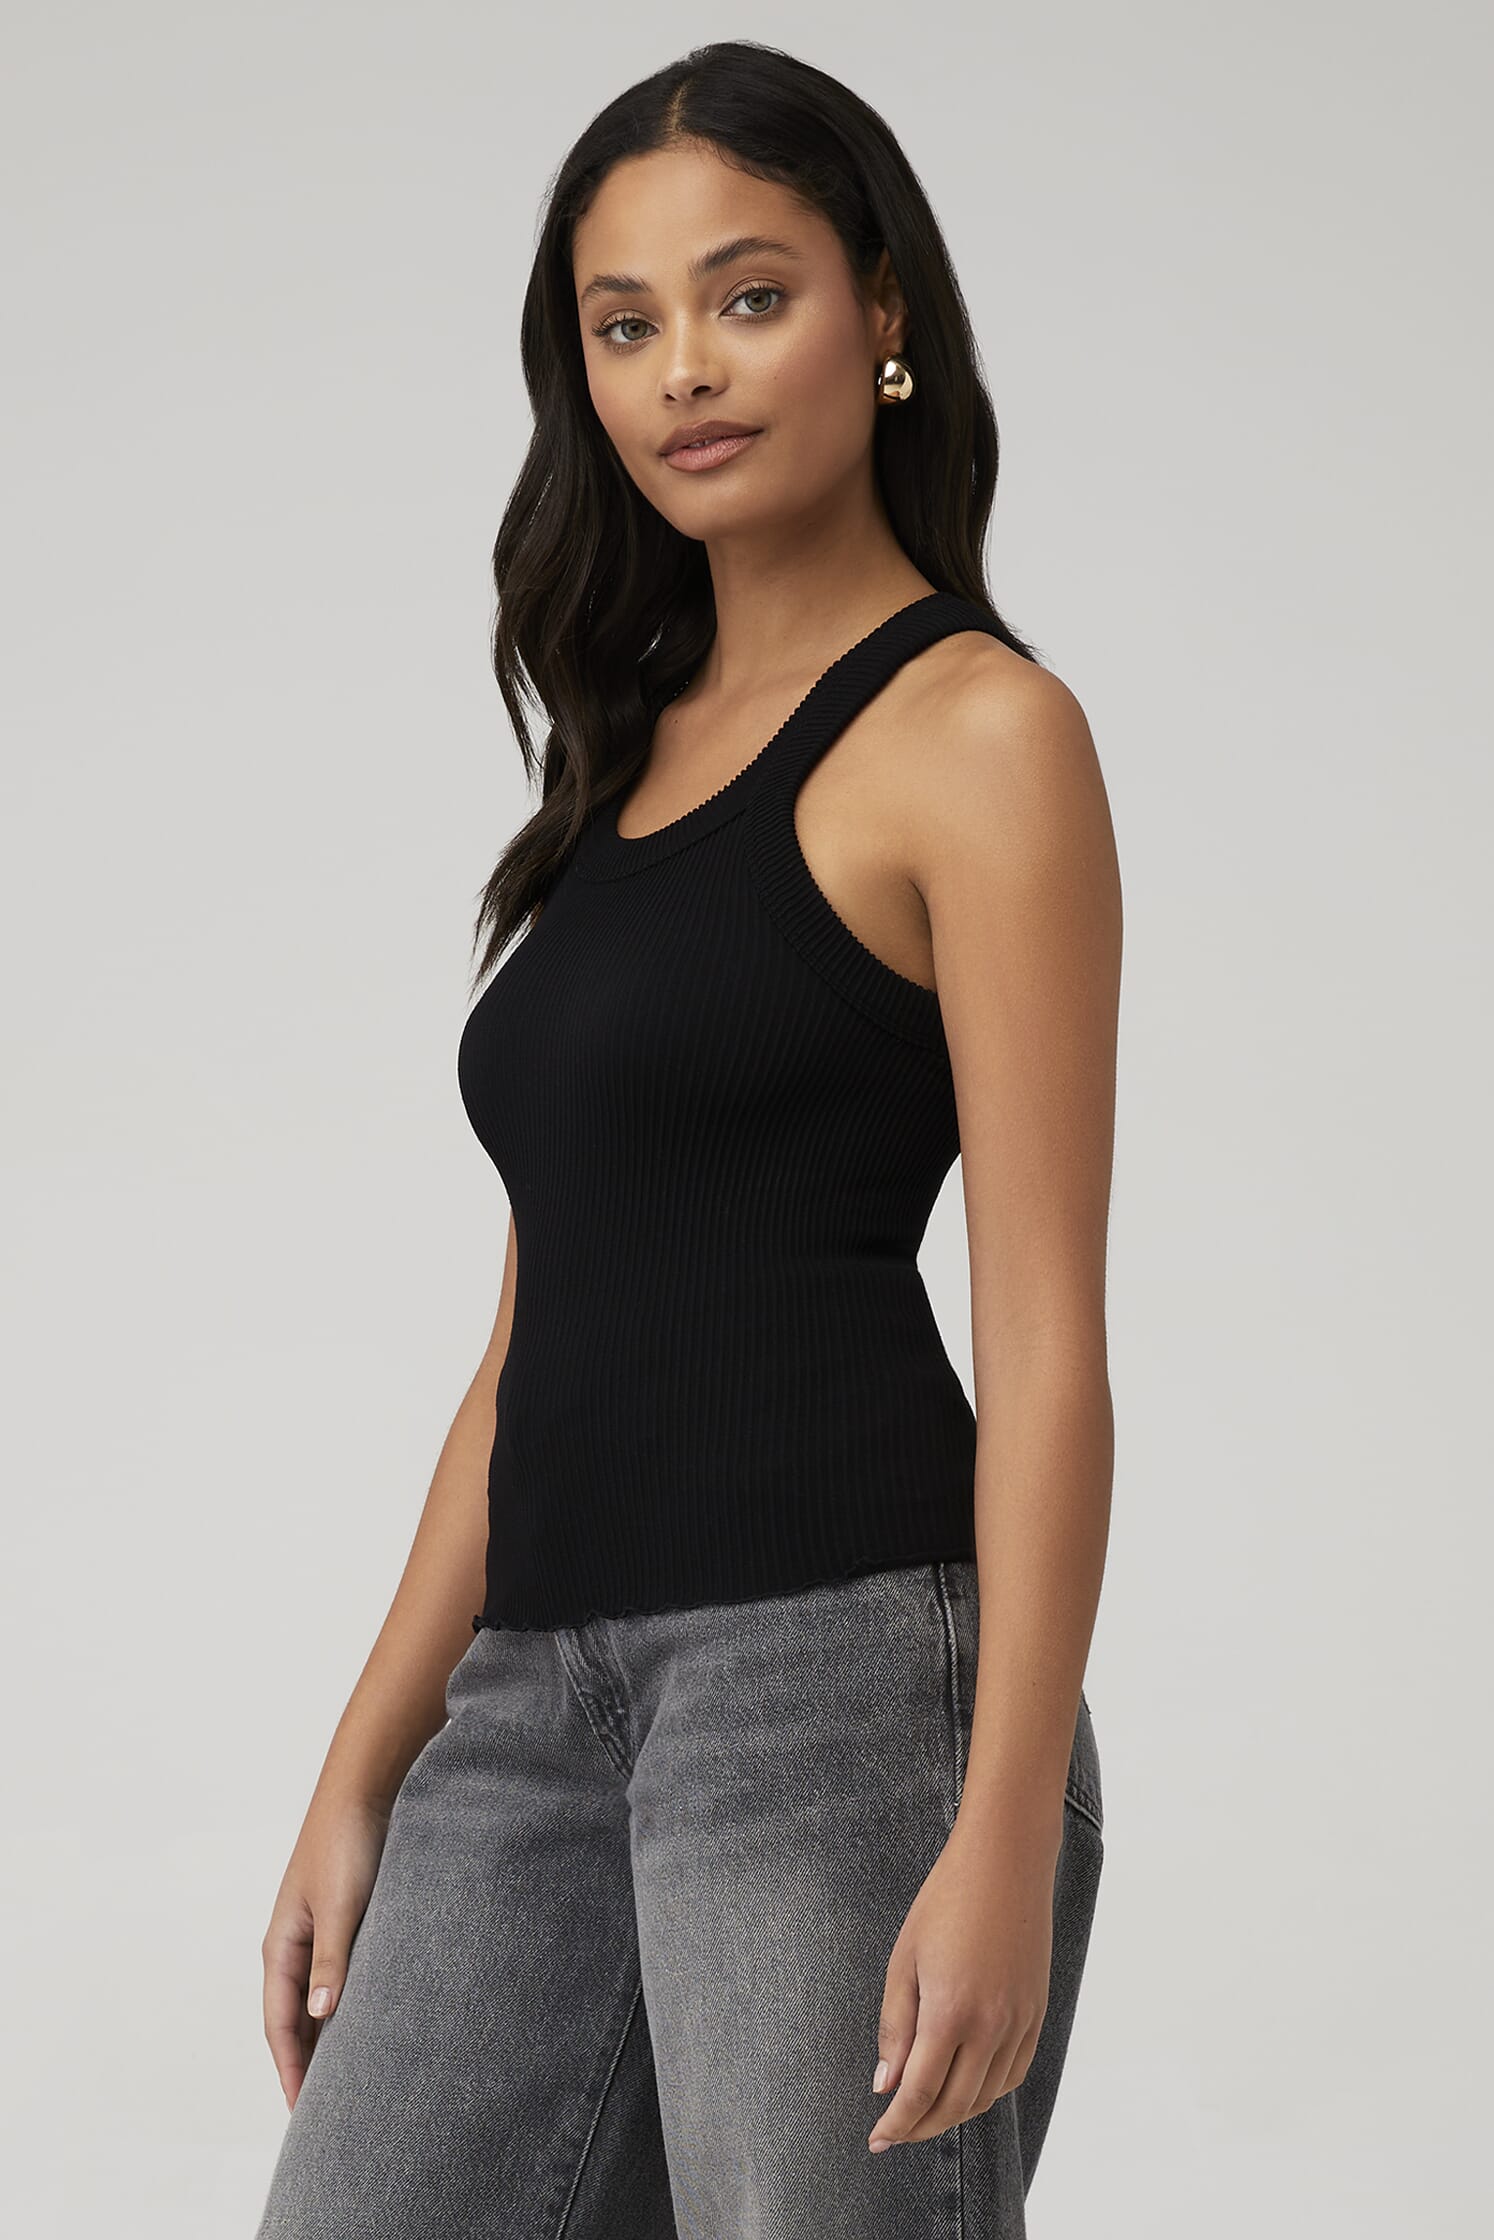 Bella Ladies 100% Cotton Tank Top, Large, Black at  Women's Clothing  store: Tank Top And Cami Shirts